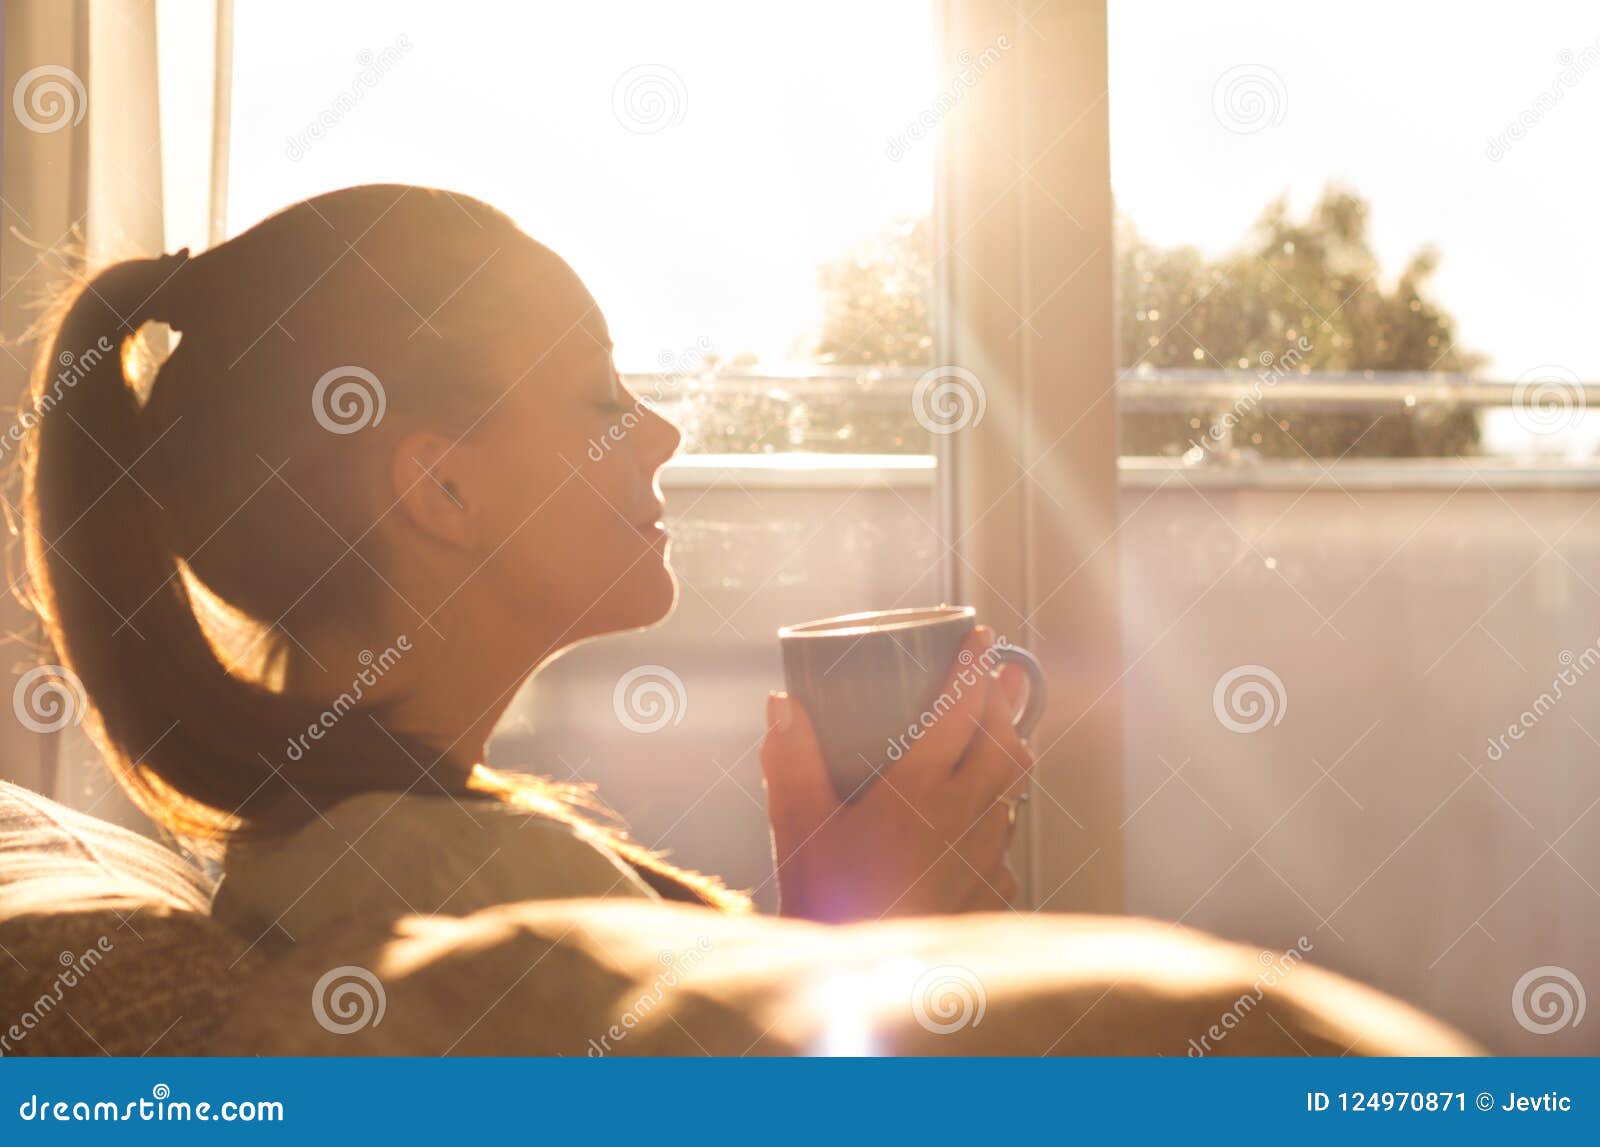 girl enjoying morning coffee in living room